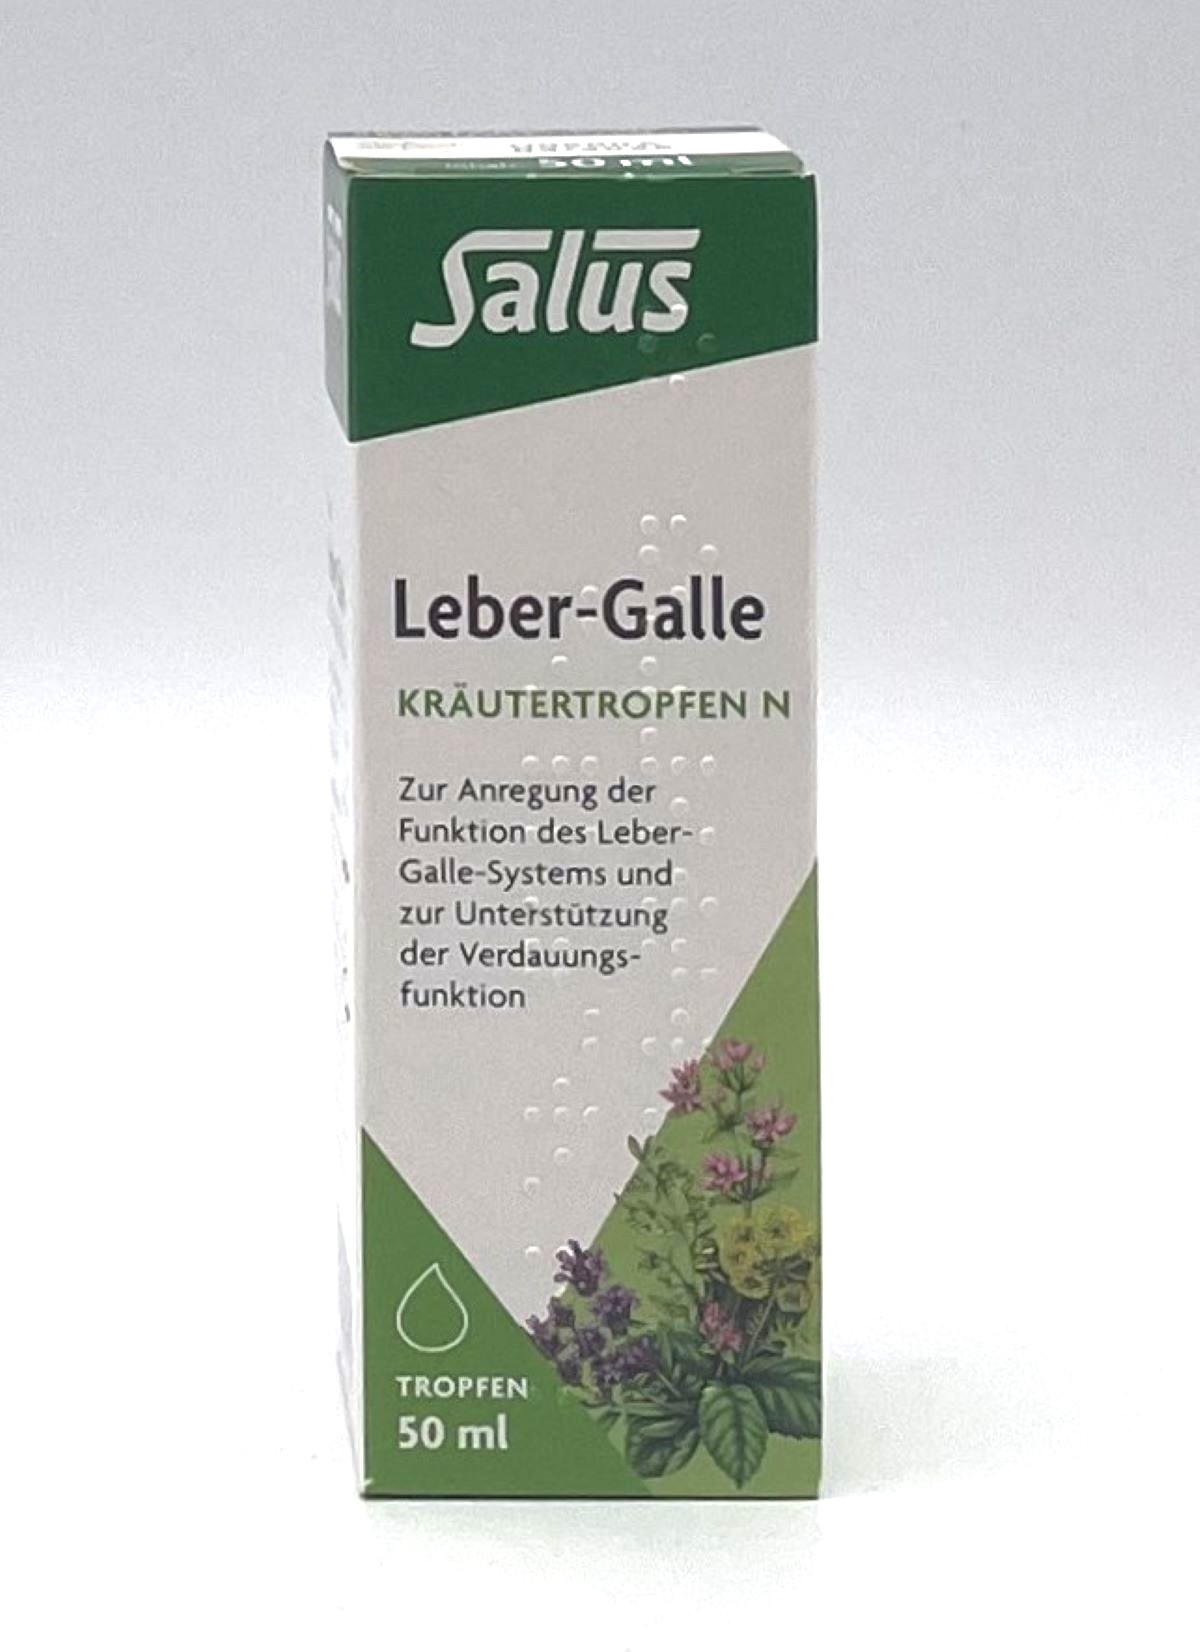 Salus Leber-Galle Kräutertropfen N 50ml